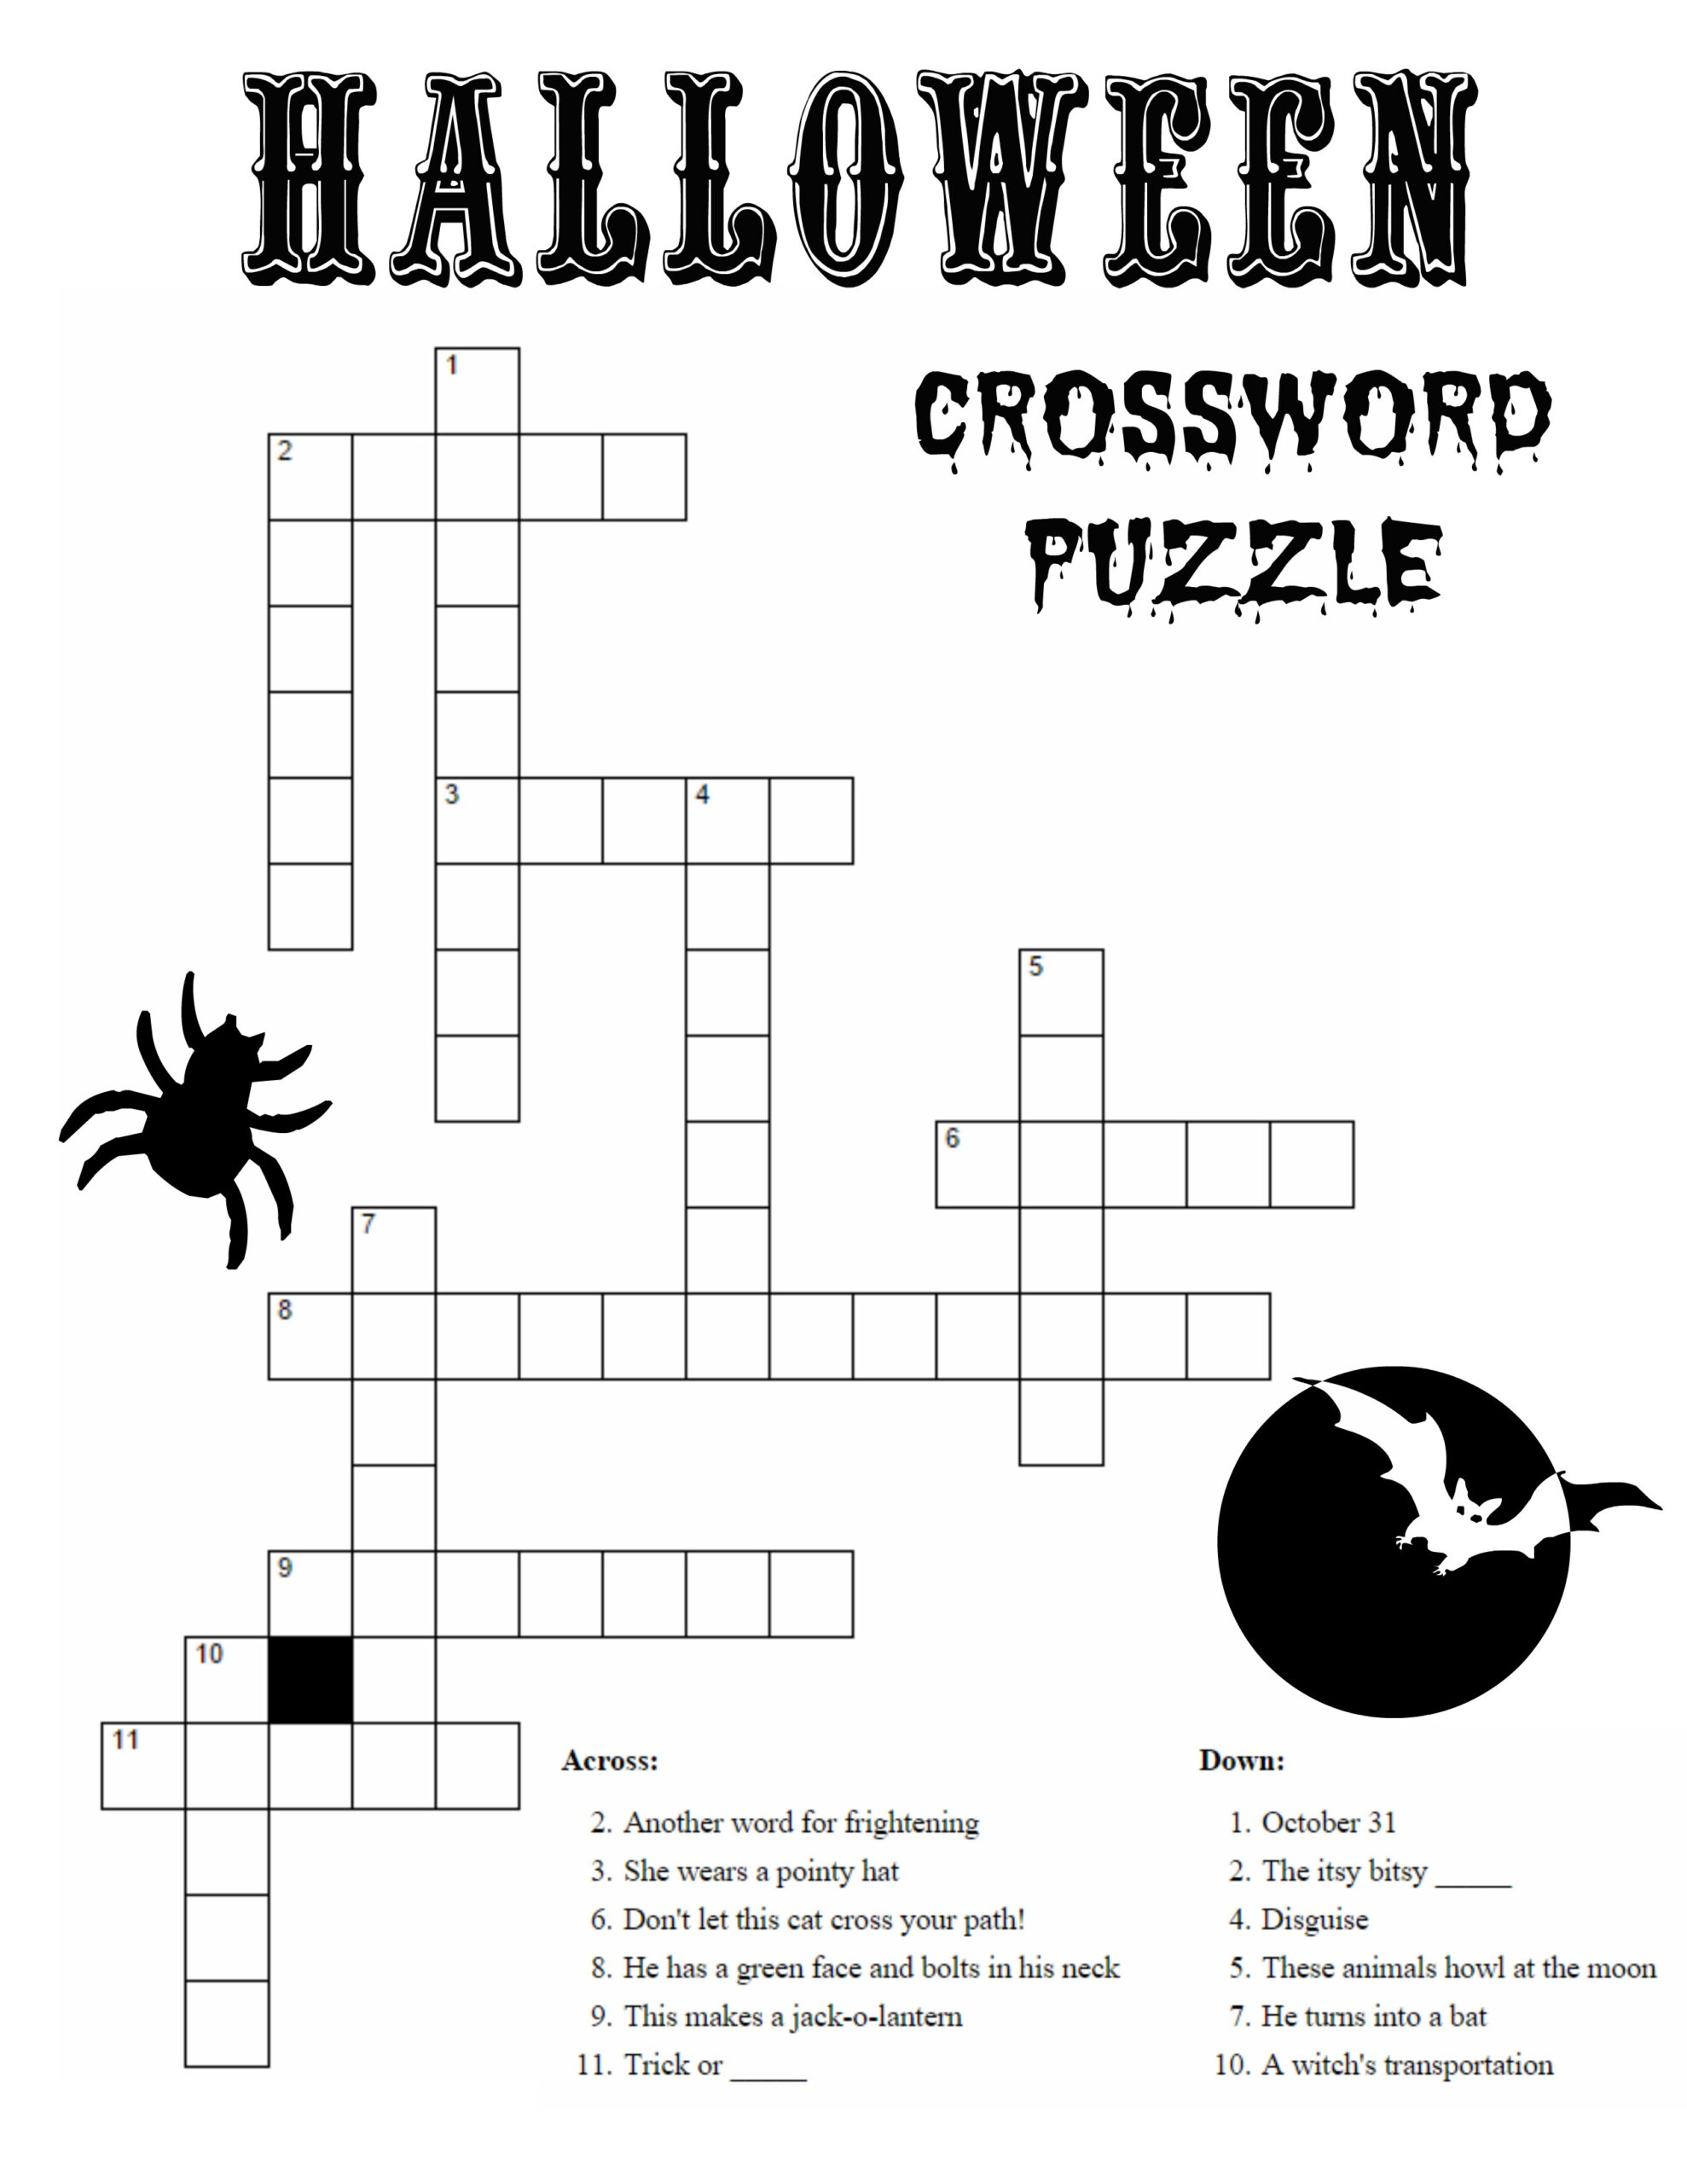 Halloween Crossword Puzzles For Adults Printable Printable Crossword 